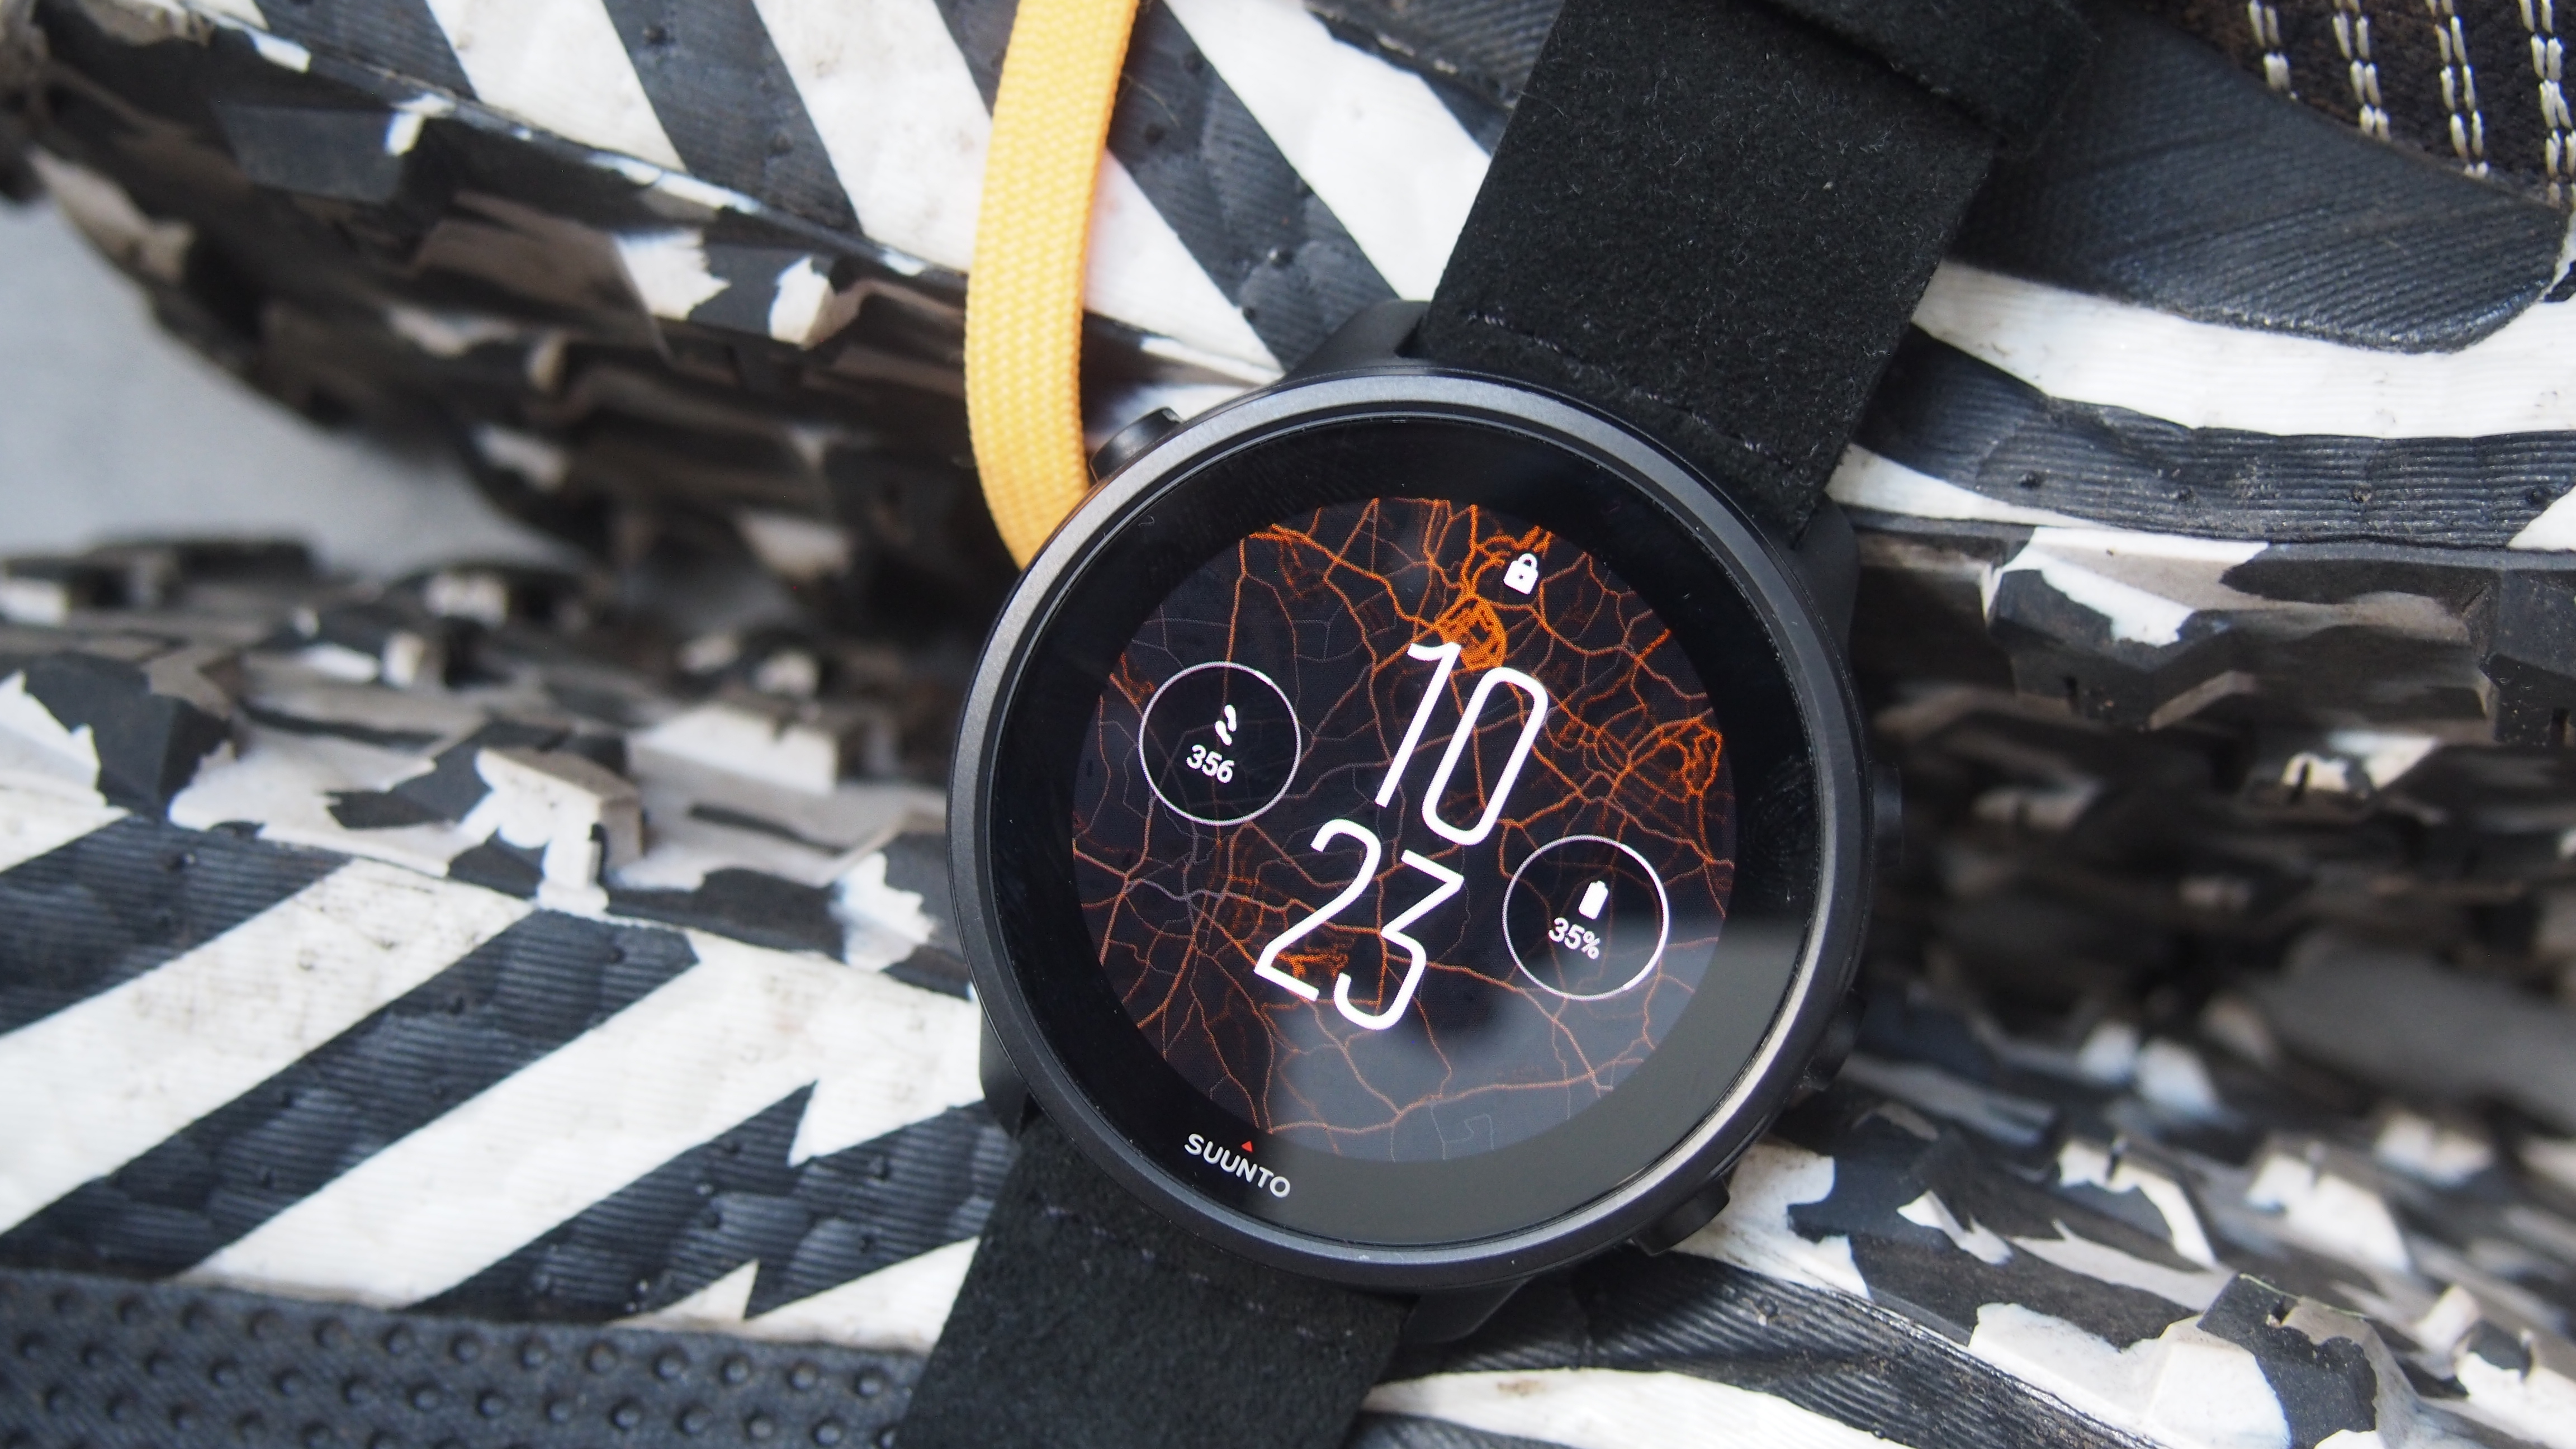 Suunto 7 Graphite Copper - Smartwatch with versatile sports experience